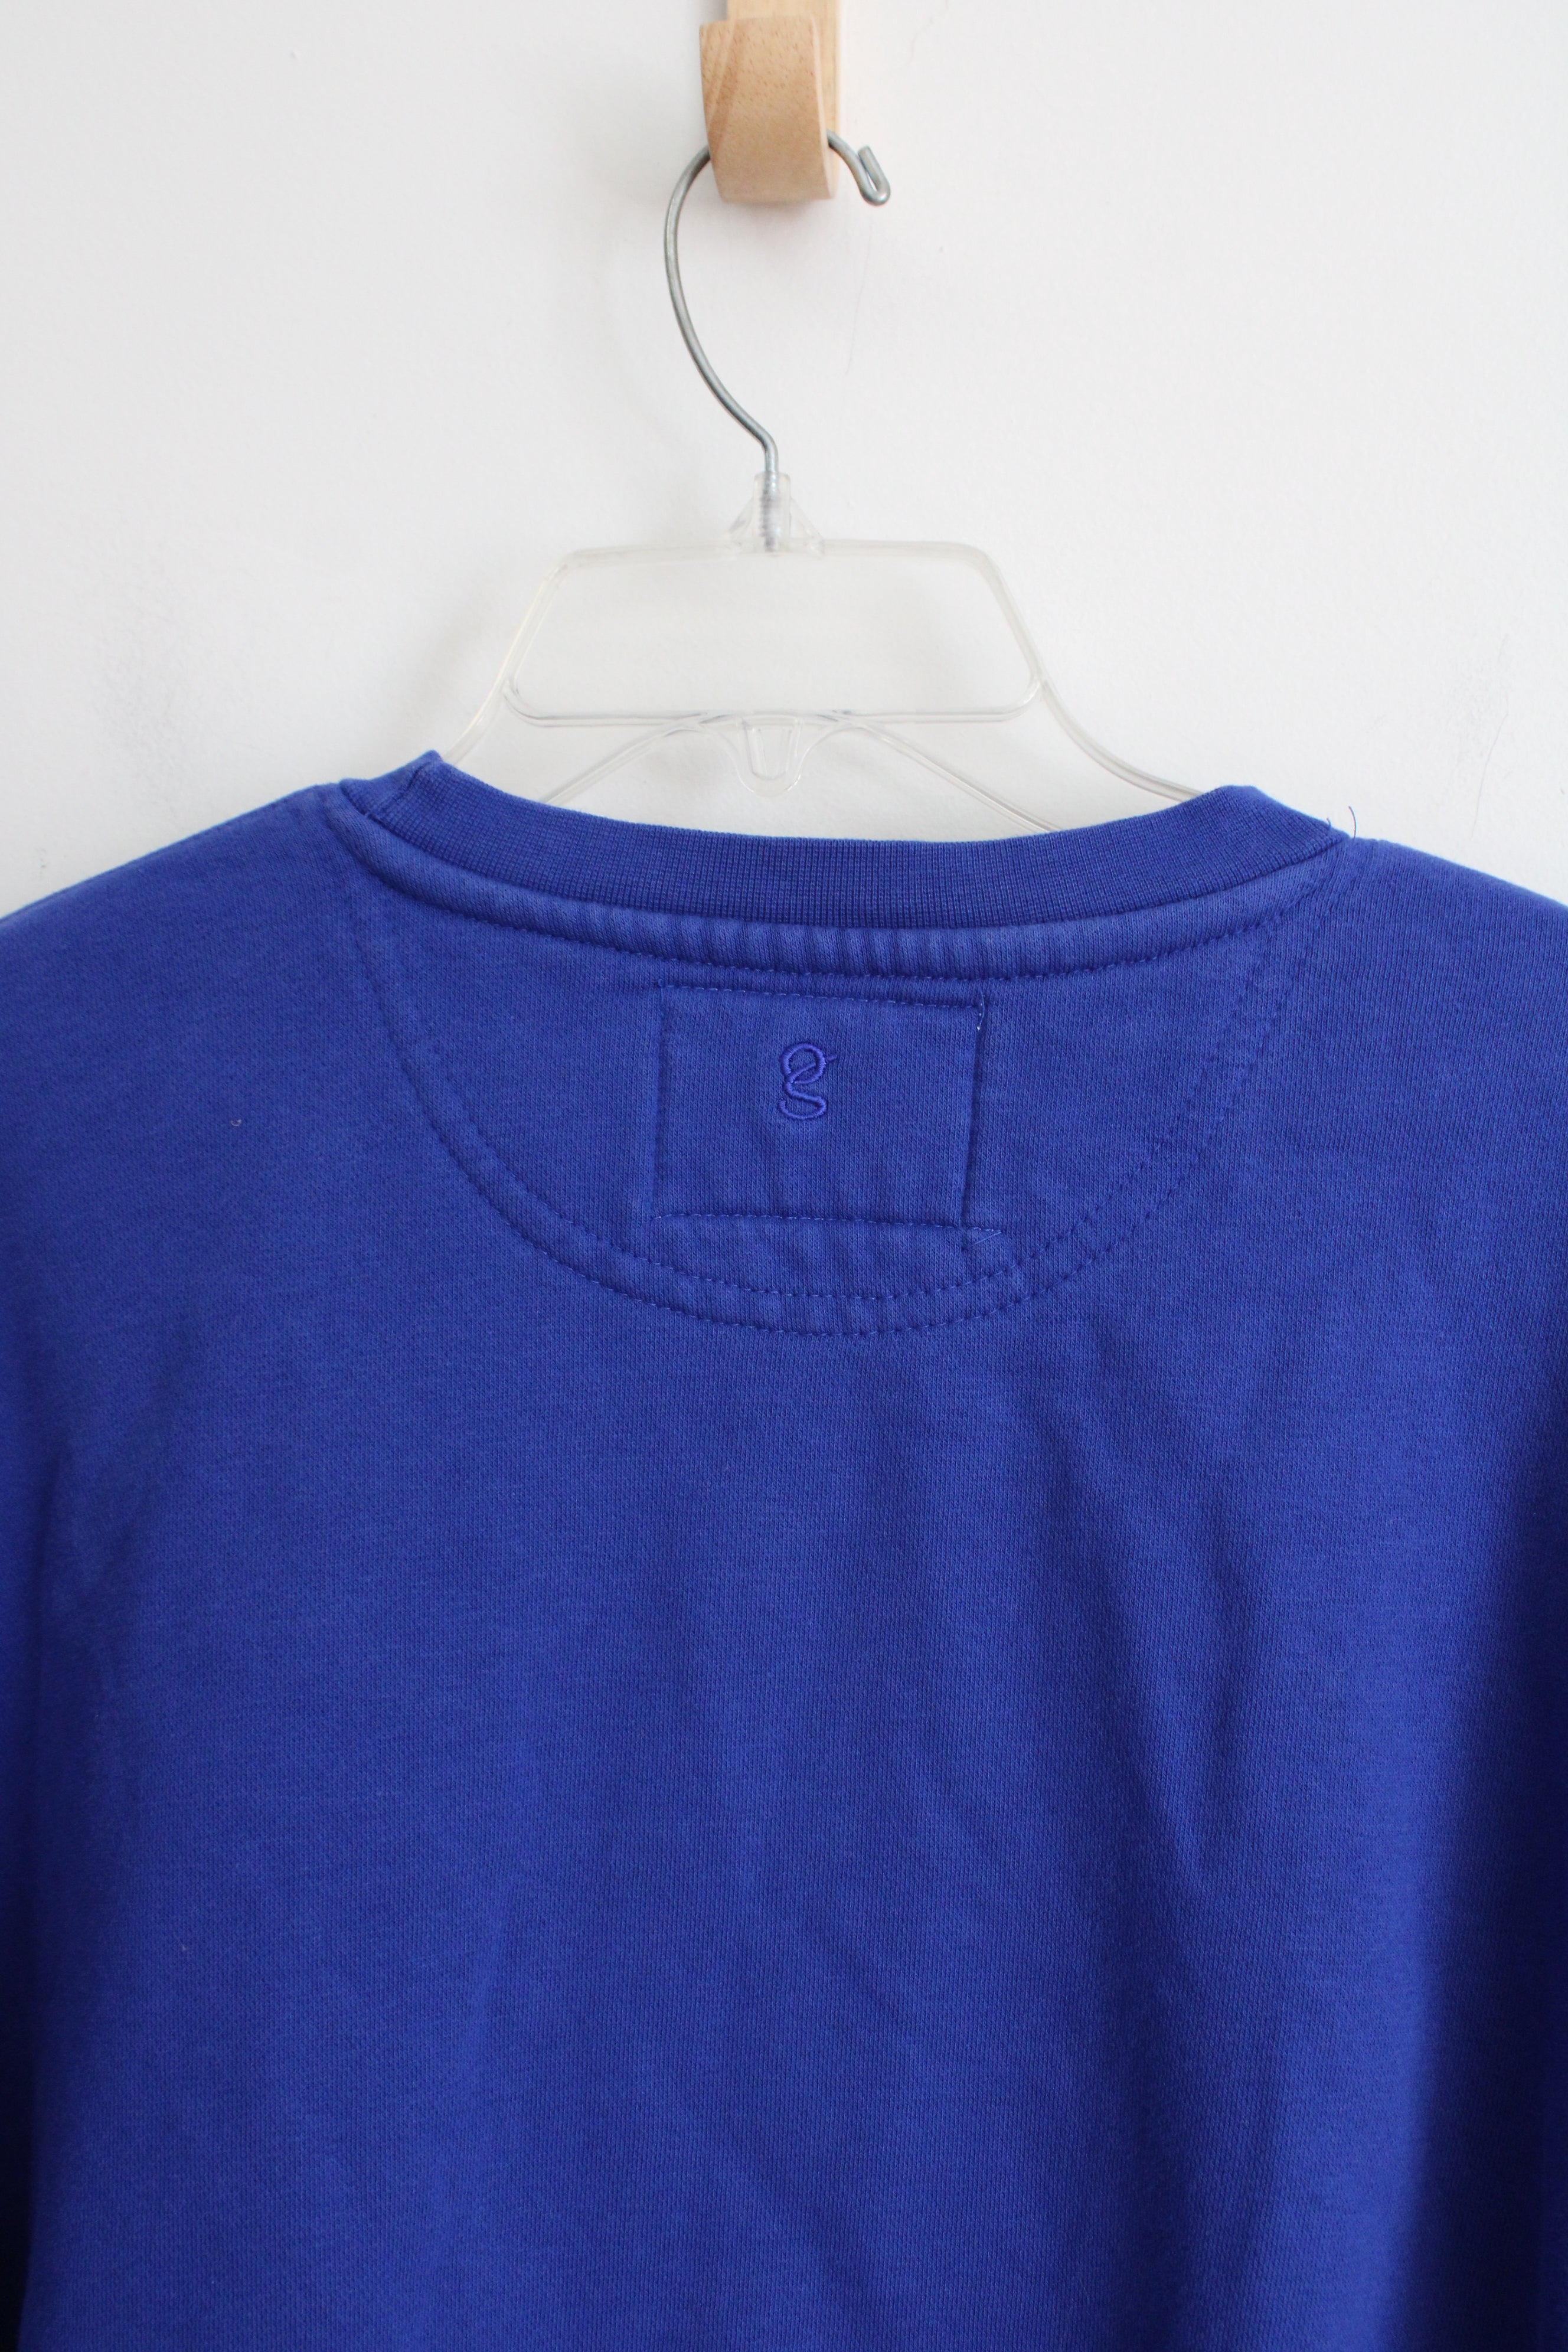 Rag Wear U.S.A. Cape May Point Cobalt Blue Sweatshirt | 2XL